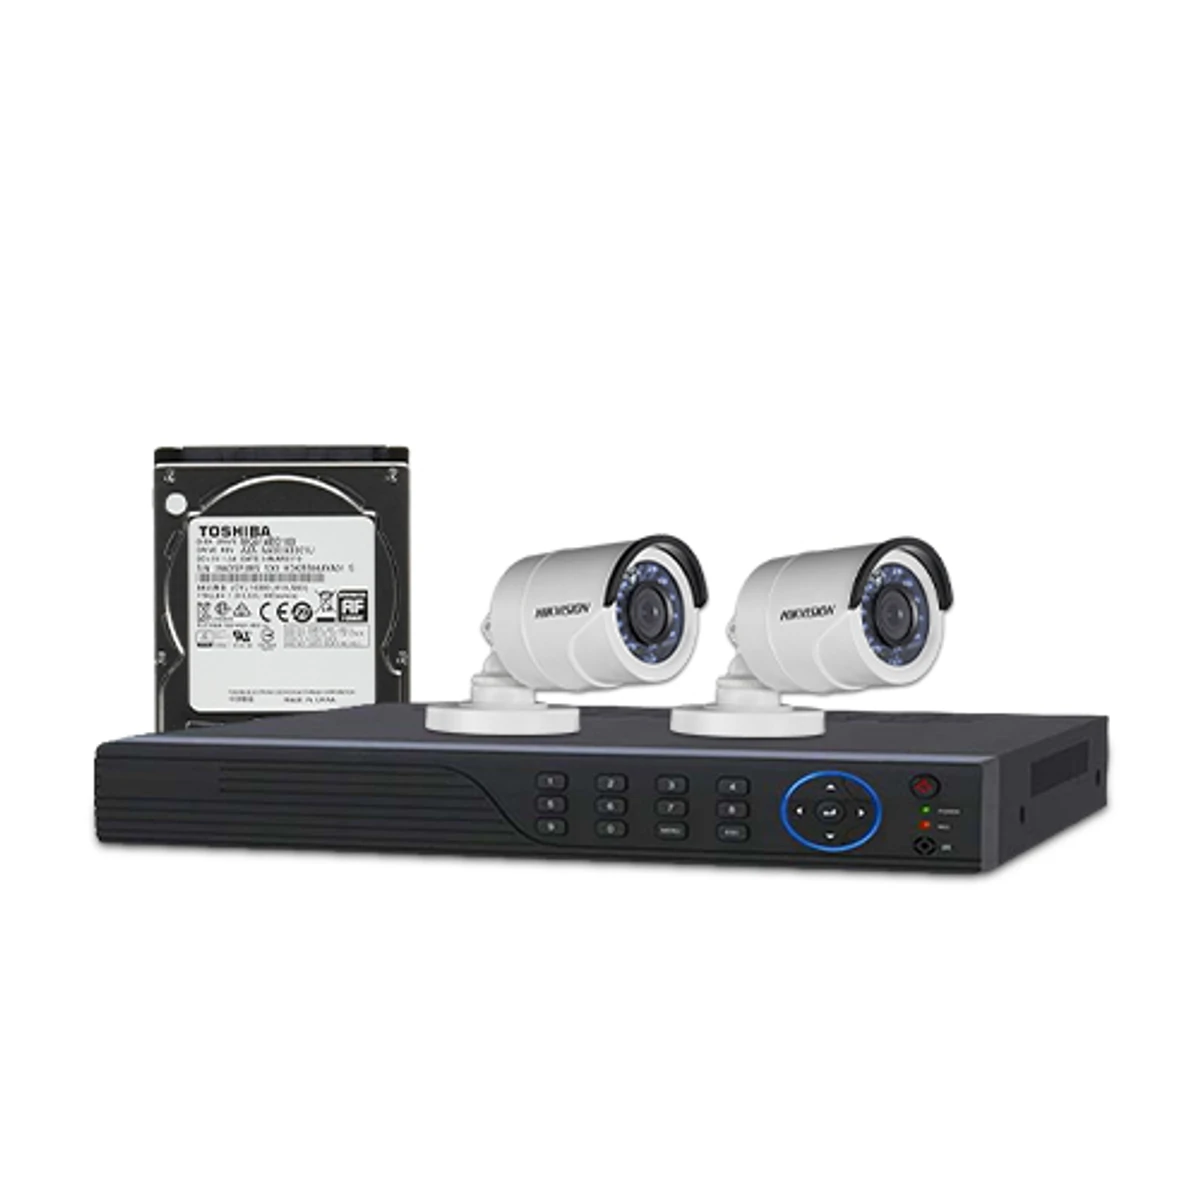 HIKvision 2 Channel CCTV Camera